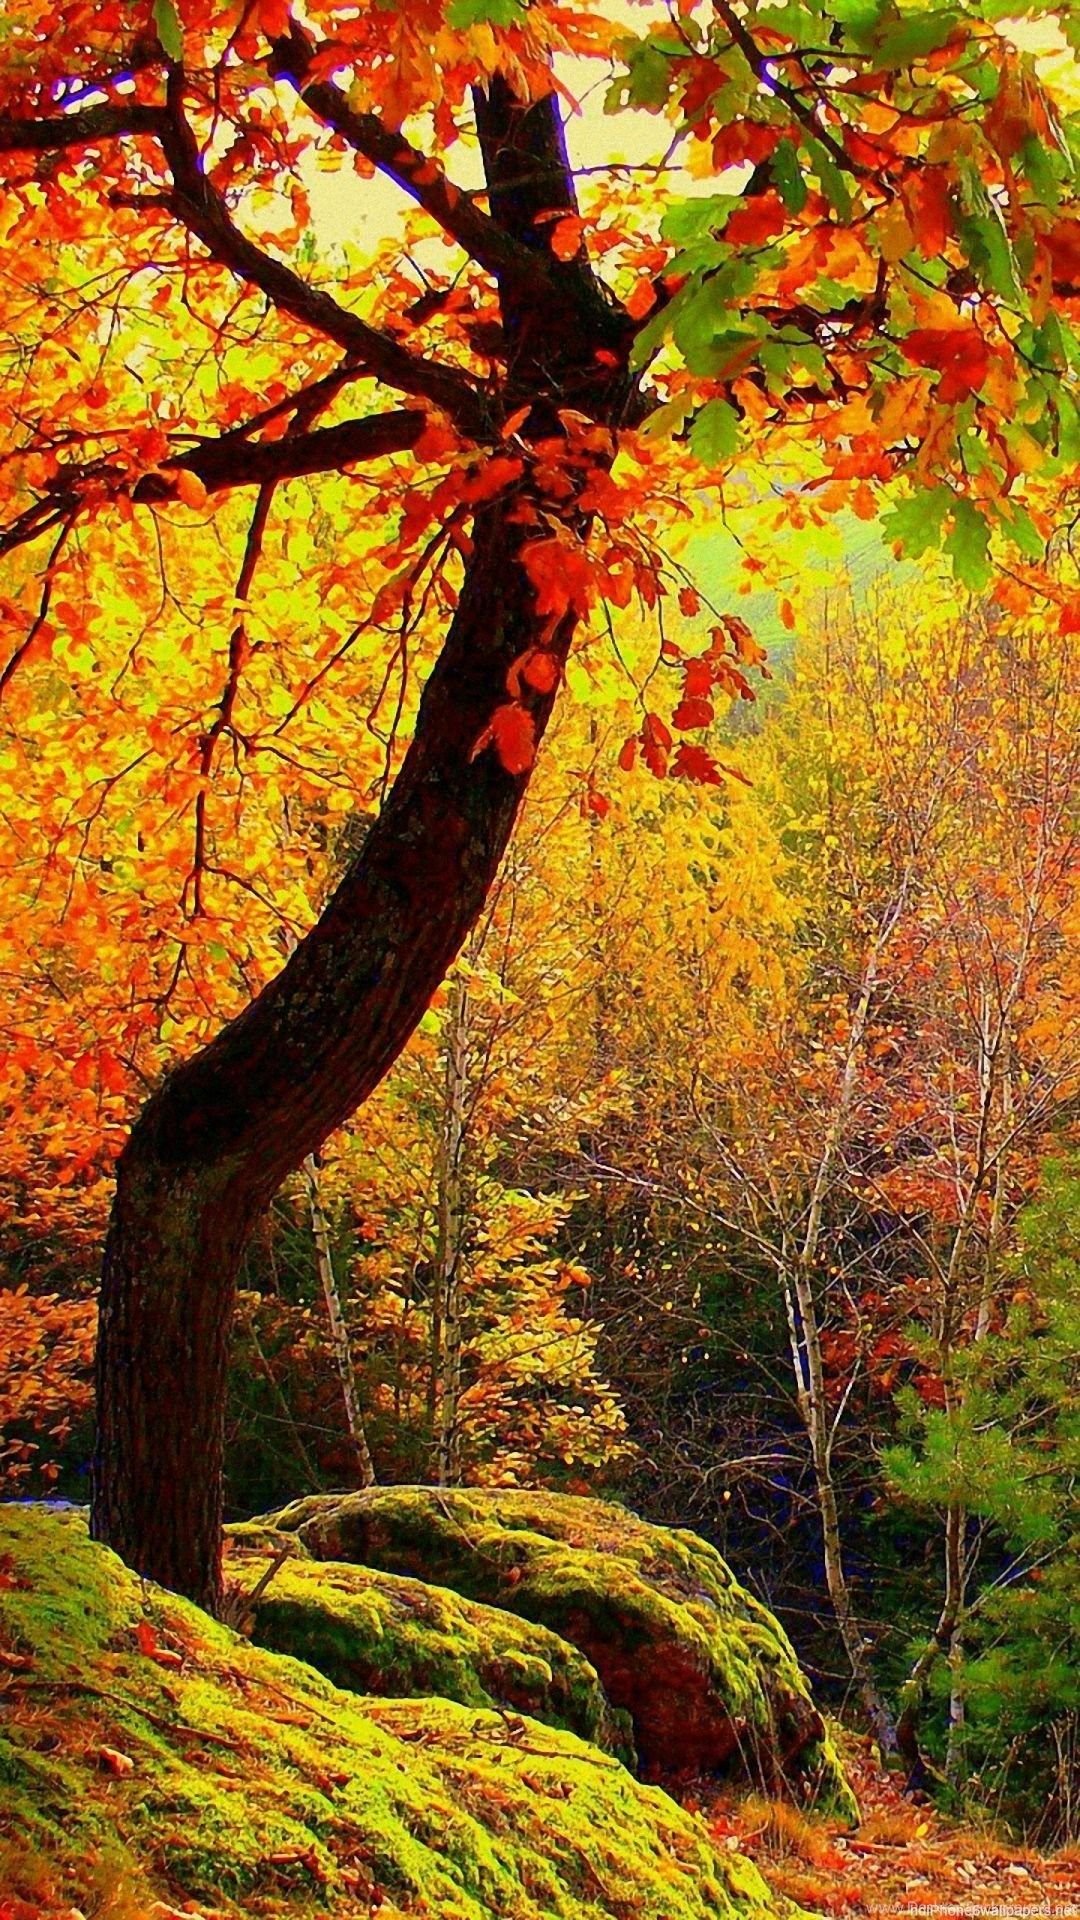 Tree Autumn Landscape iPhone 6 Wallpaper HD And 1080P 6 Plus. Desktop Background